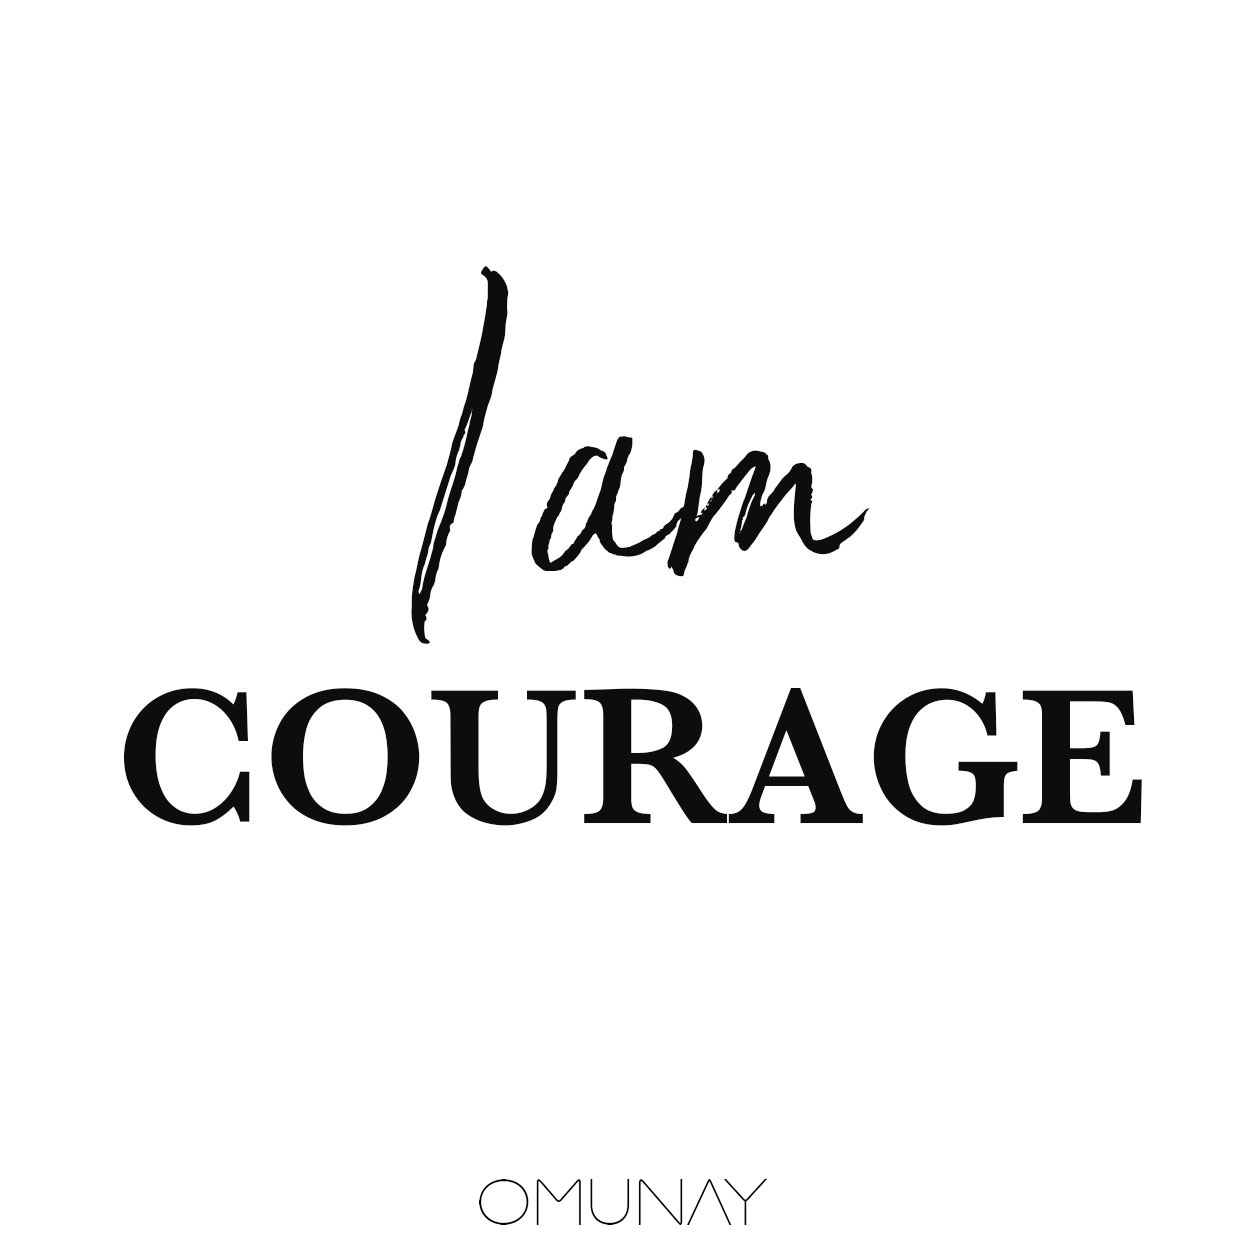 "I am courage" written on white back ground